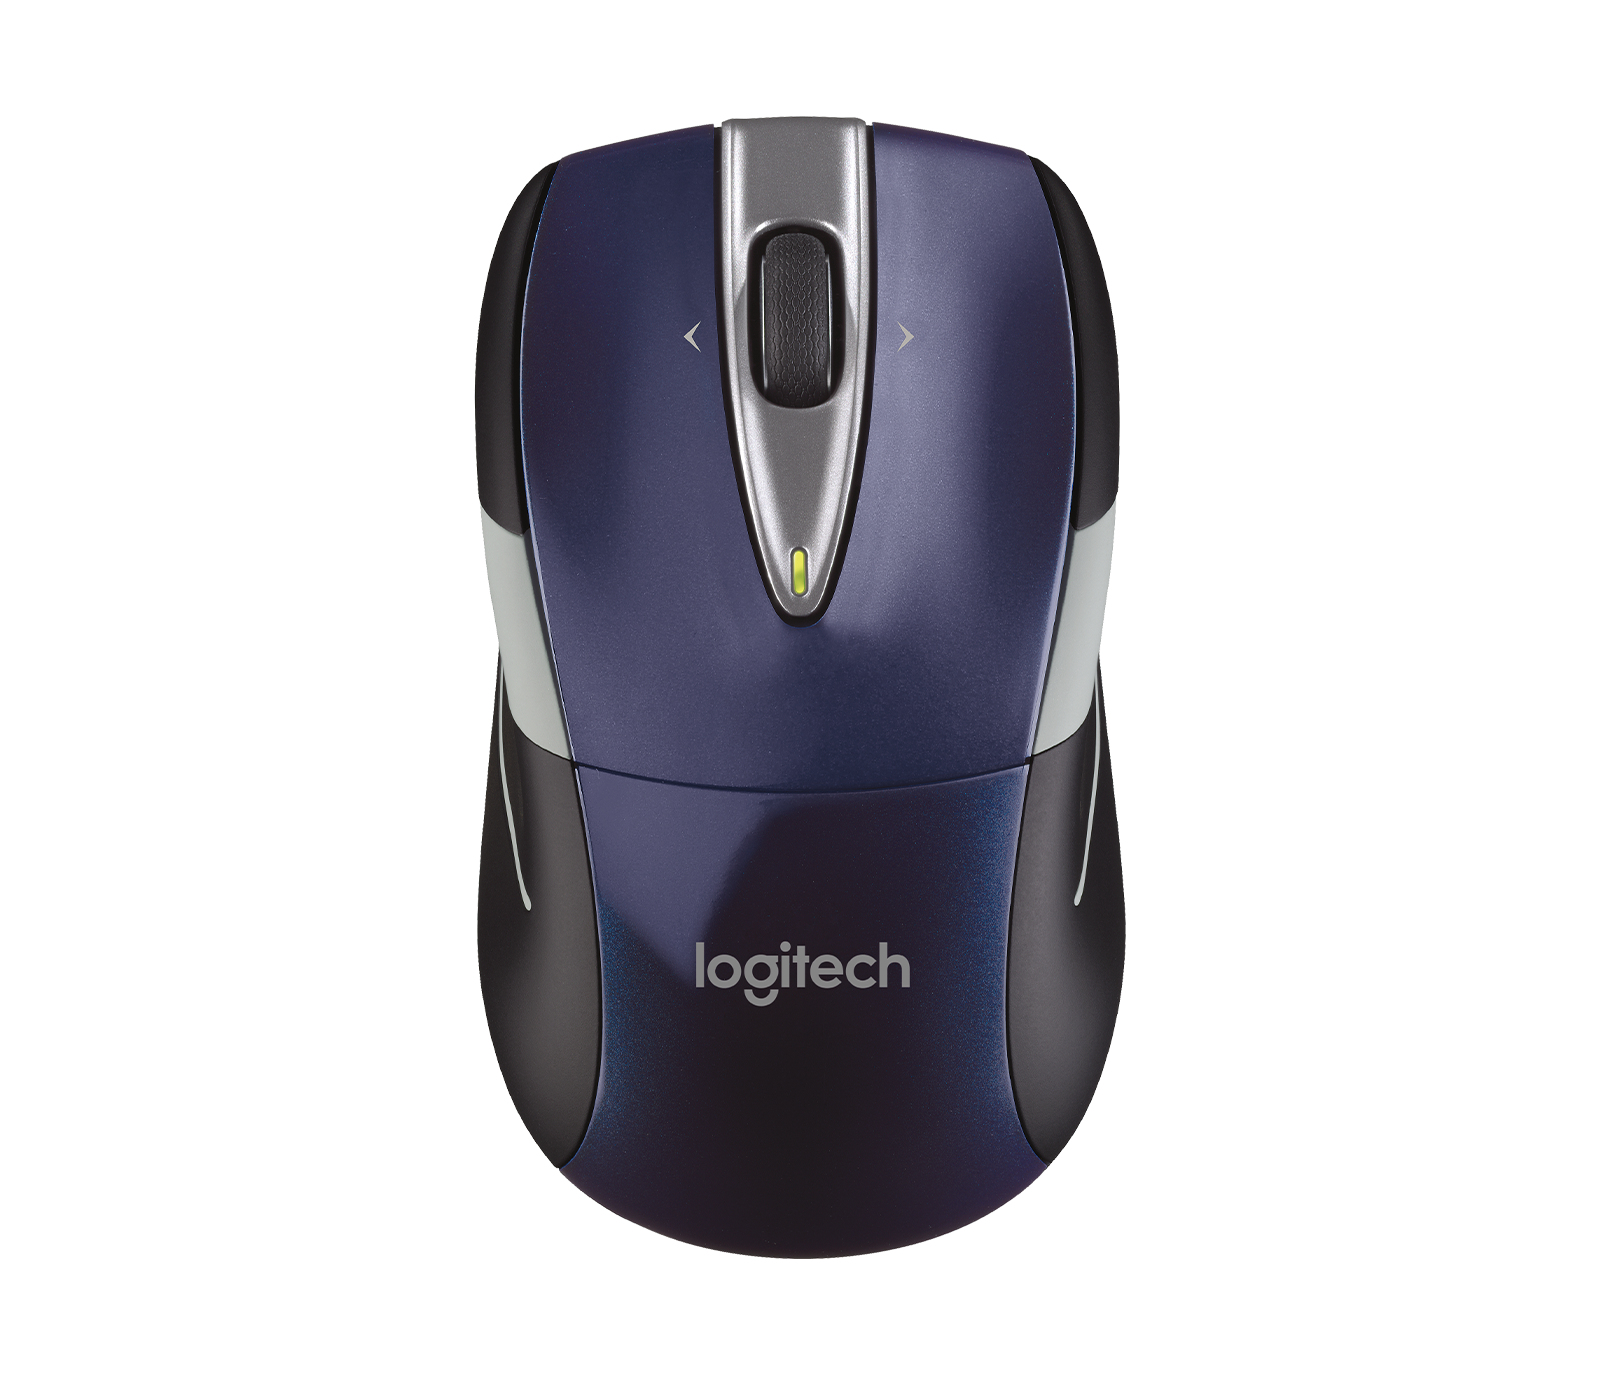 Logitech M525 Wireless Mouse Precision Scrolling